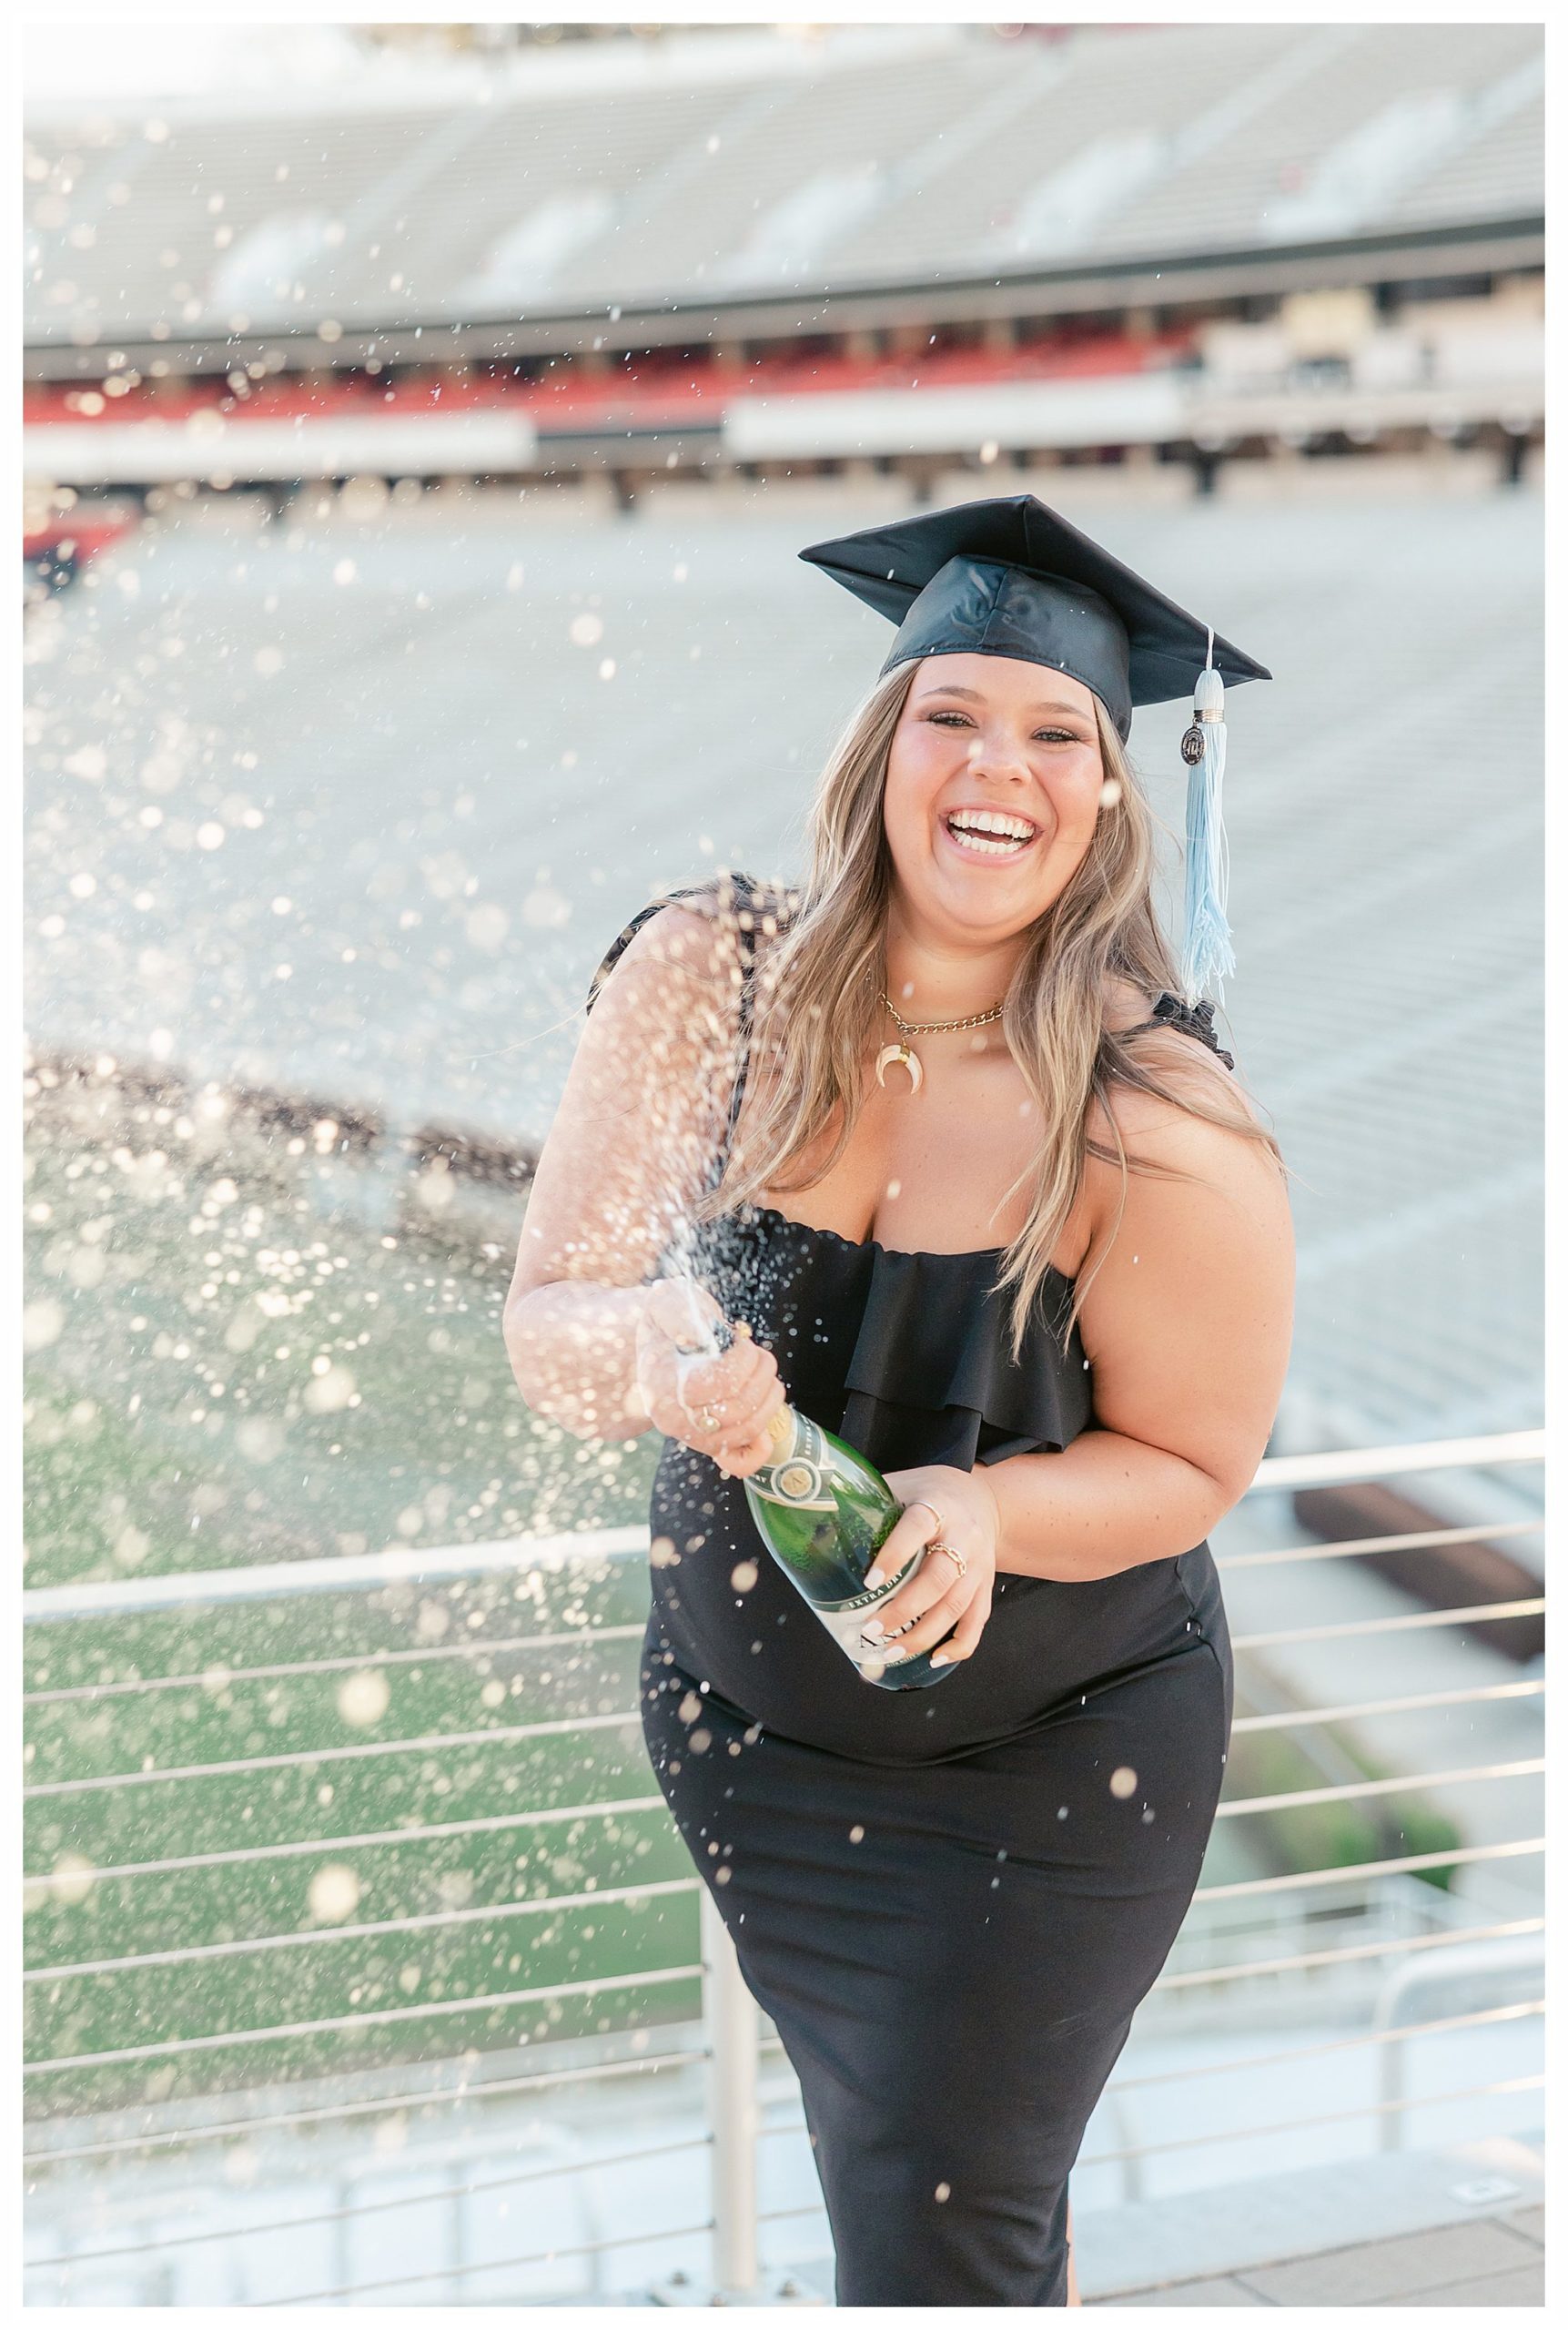 uga Stamford stadium graduation photos with champagne